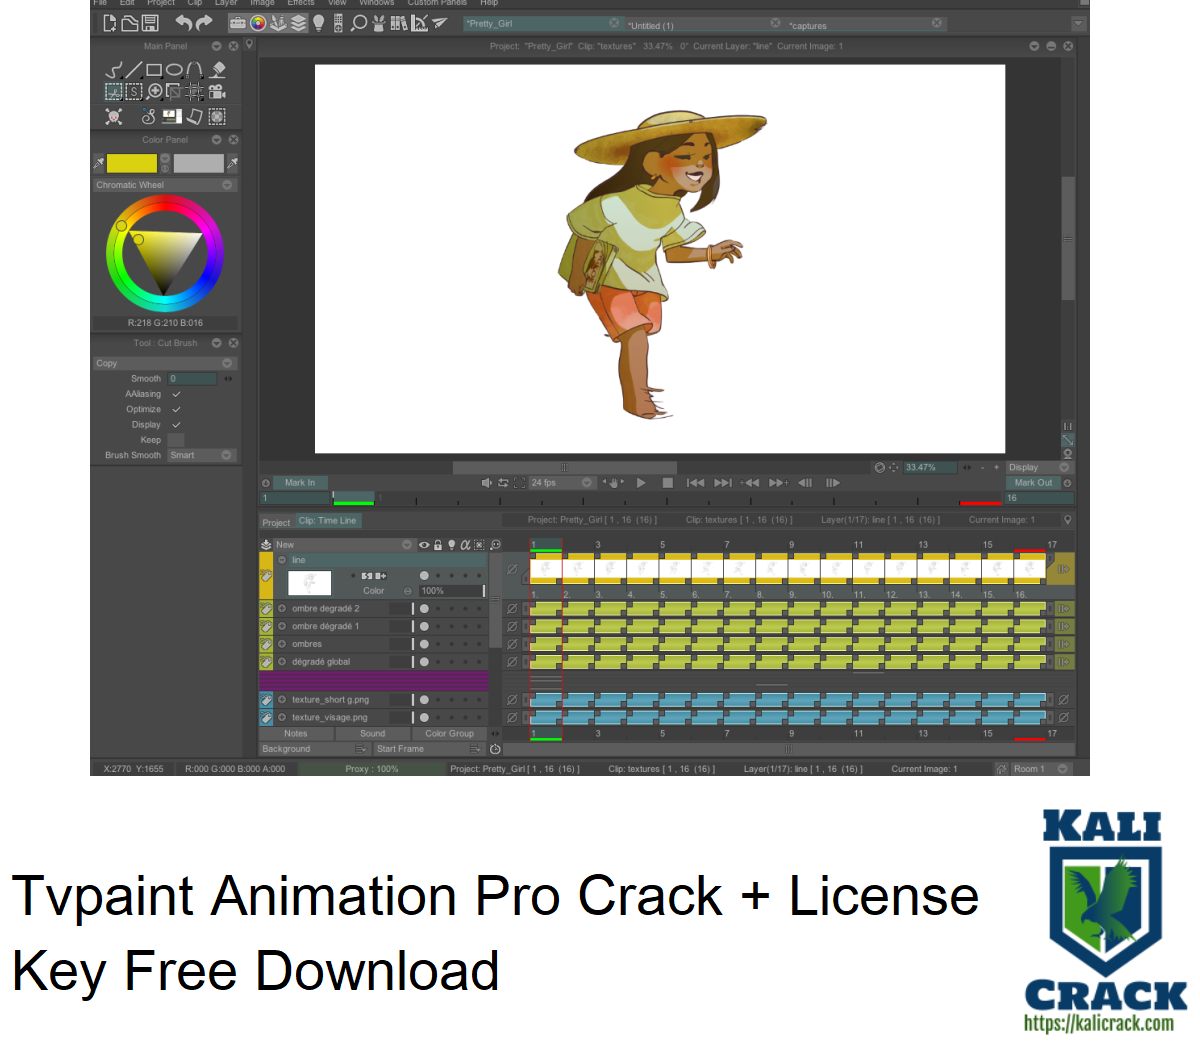 tvpaint animation pro 11 crack